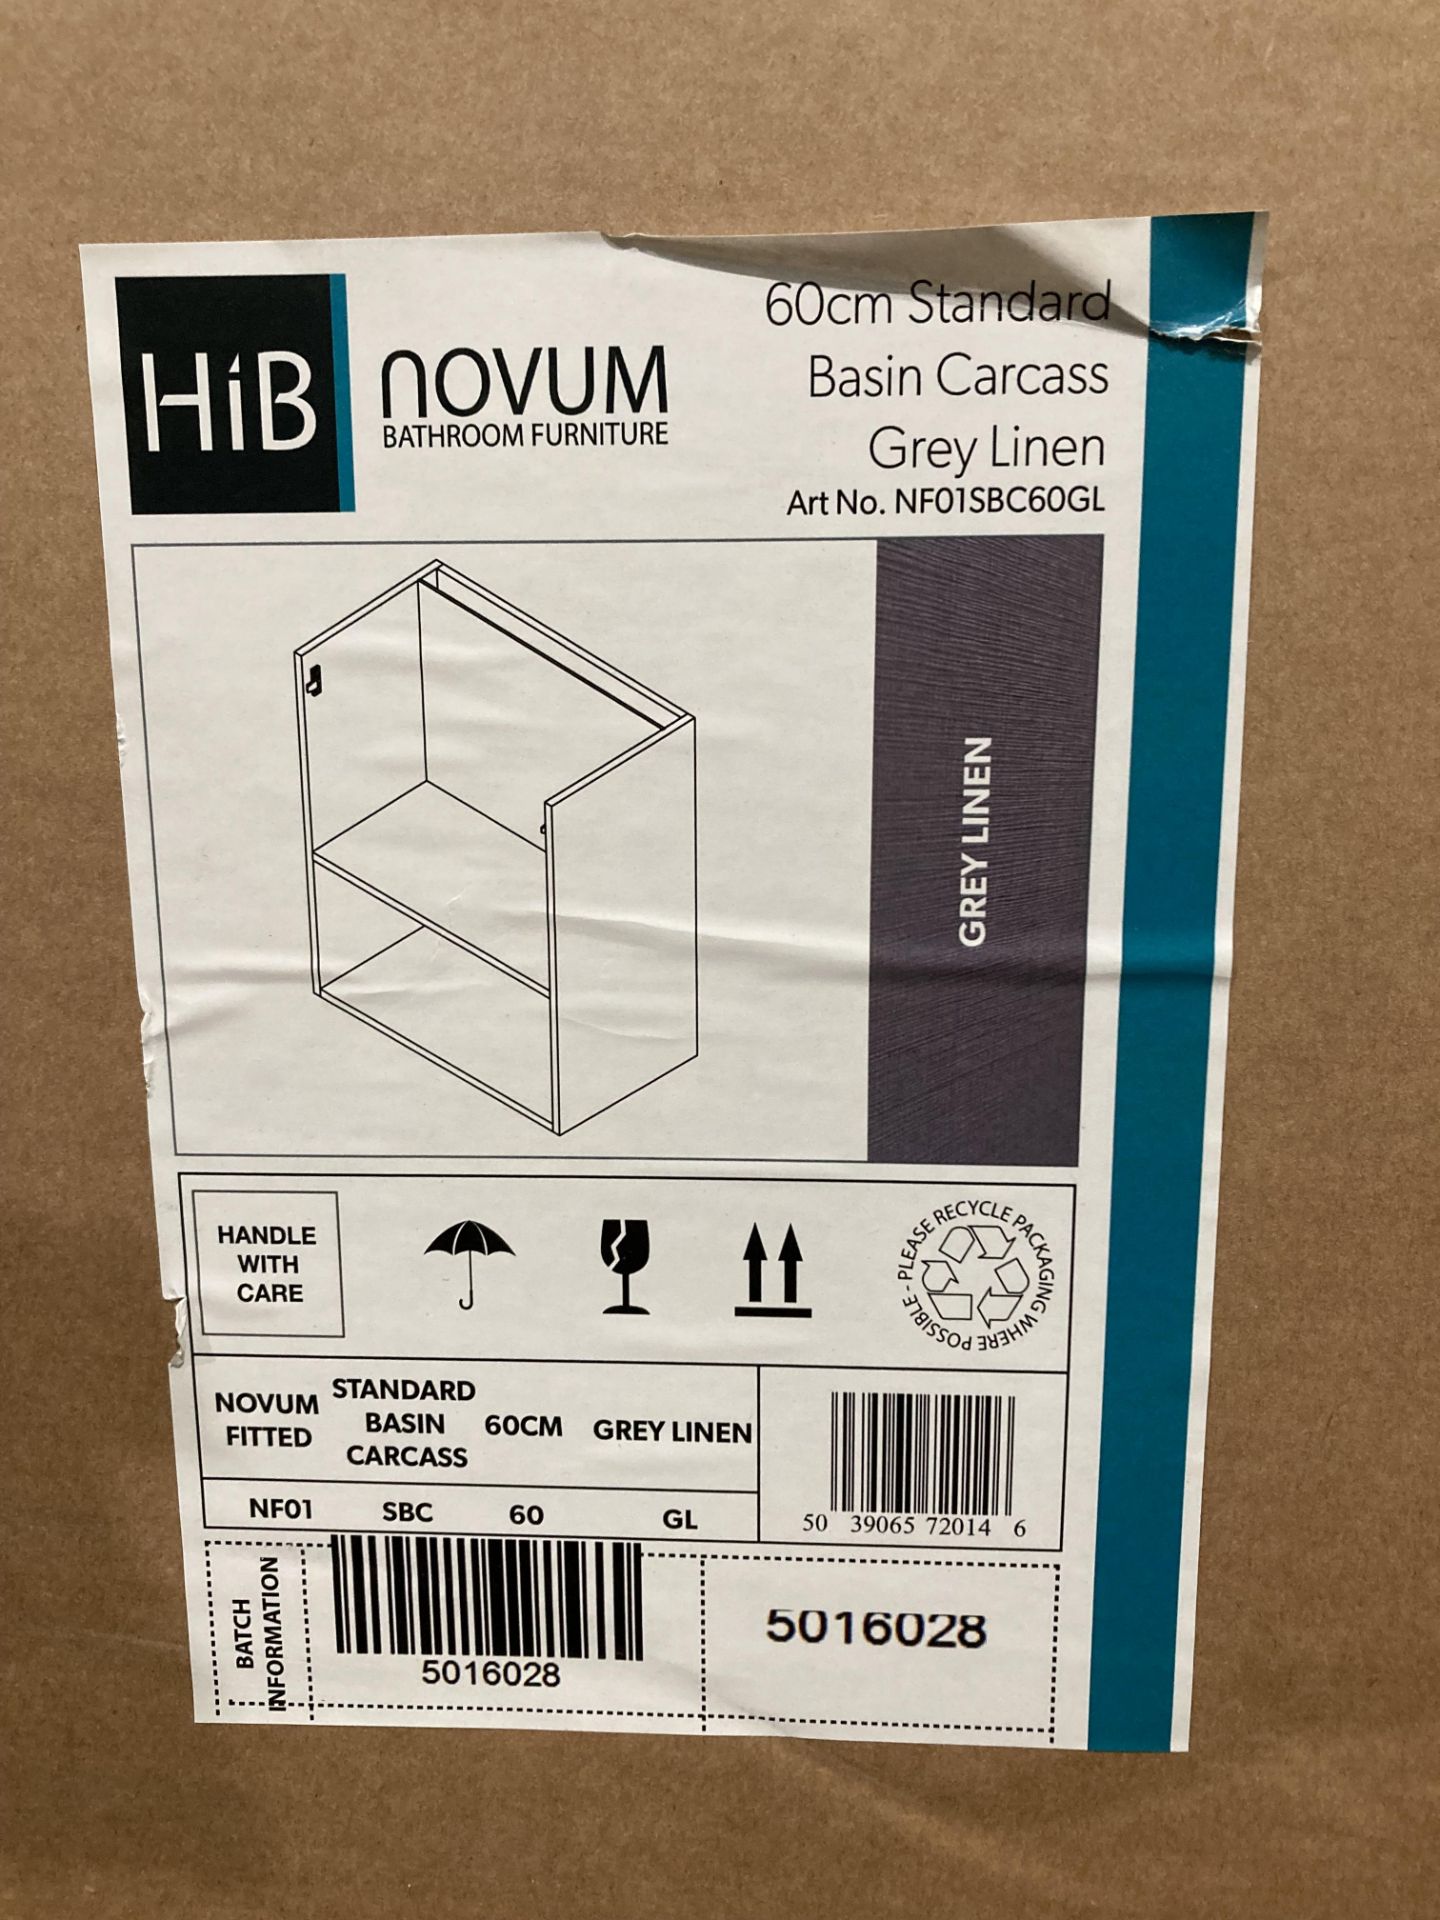 Hib Novum 60cm standard basin carcass in grey linen (new boxed) (saleroom location: RB)